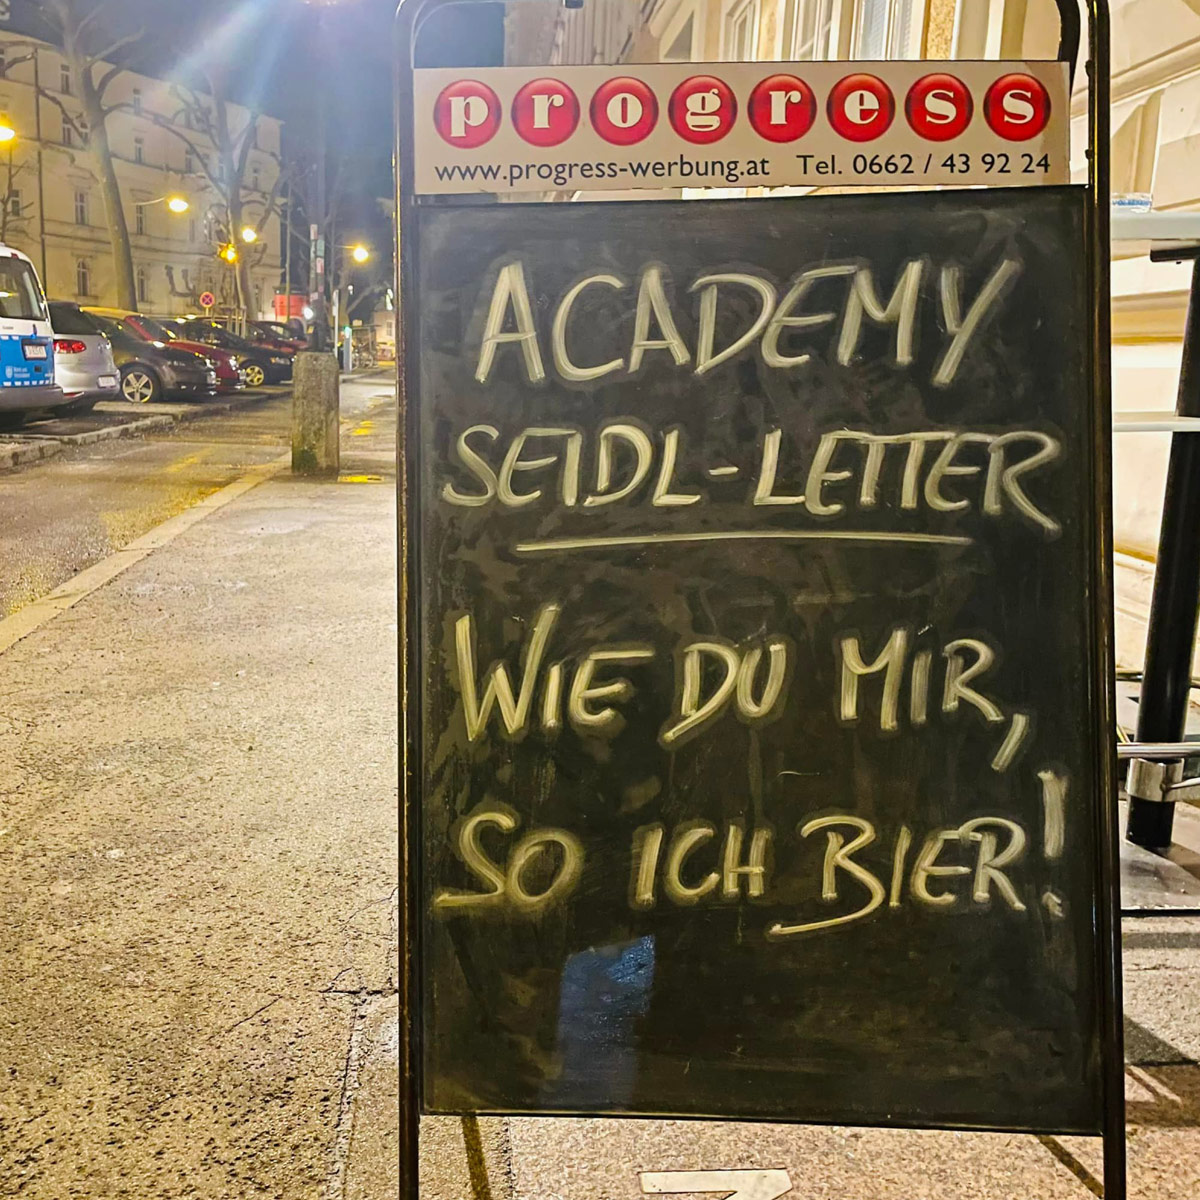 Academy Seidl-Letter: Wie Du Mir, So Ich Bier!